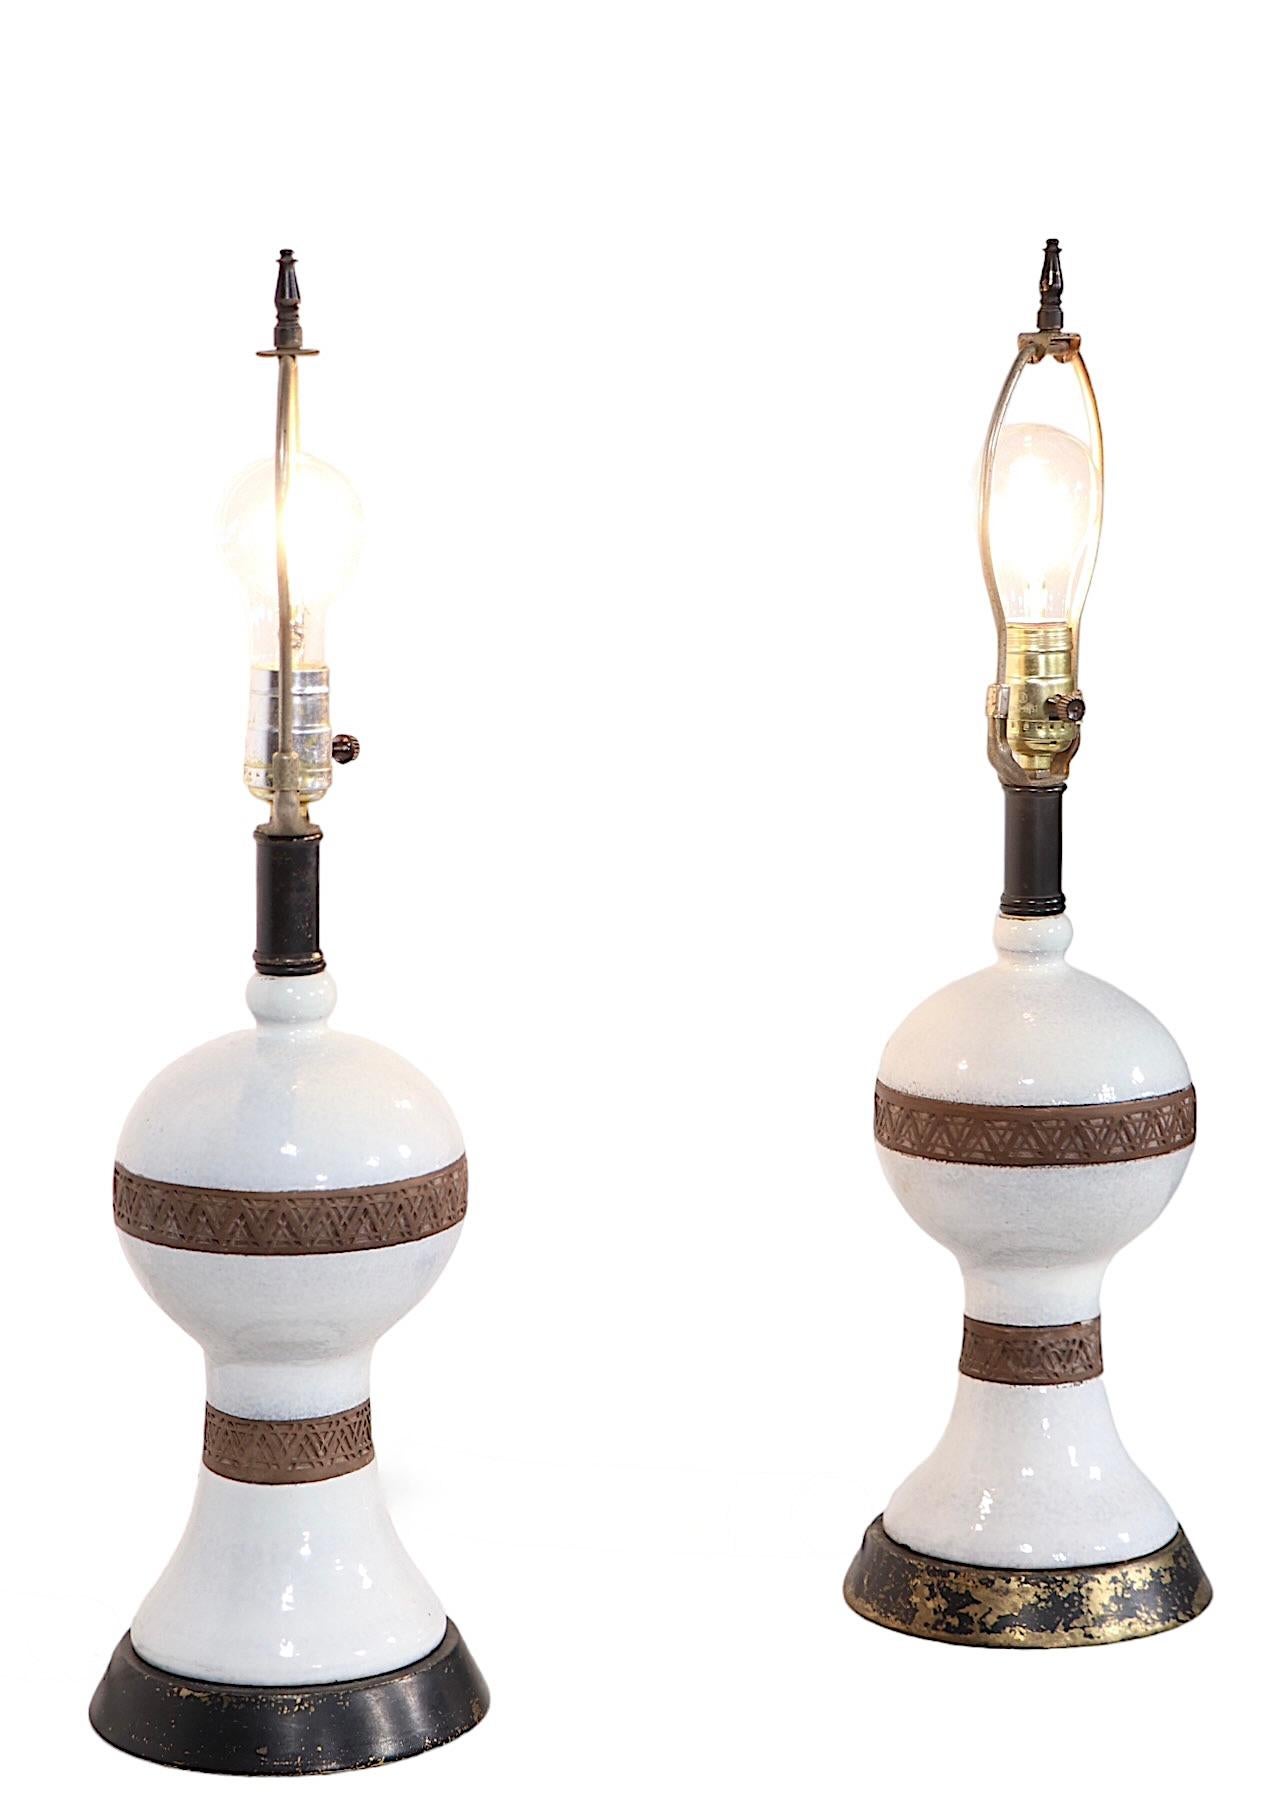 Pr. Ceramic Table Lamps Made in Italy Attr. to Urbano Zaccagnini  For Sale 2